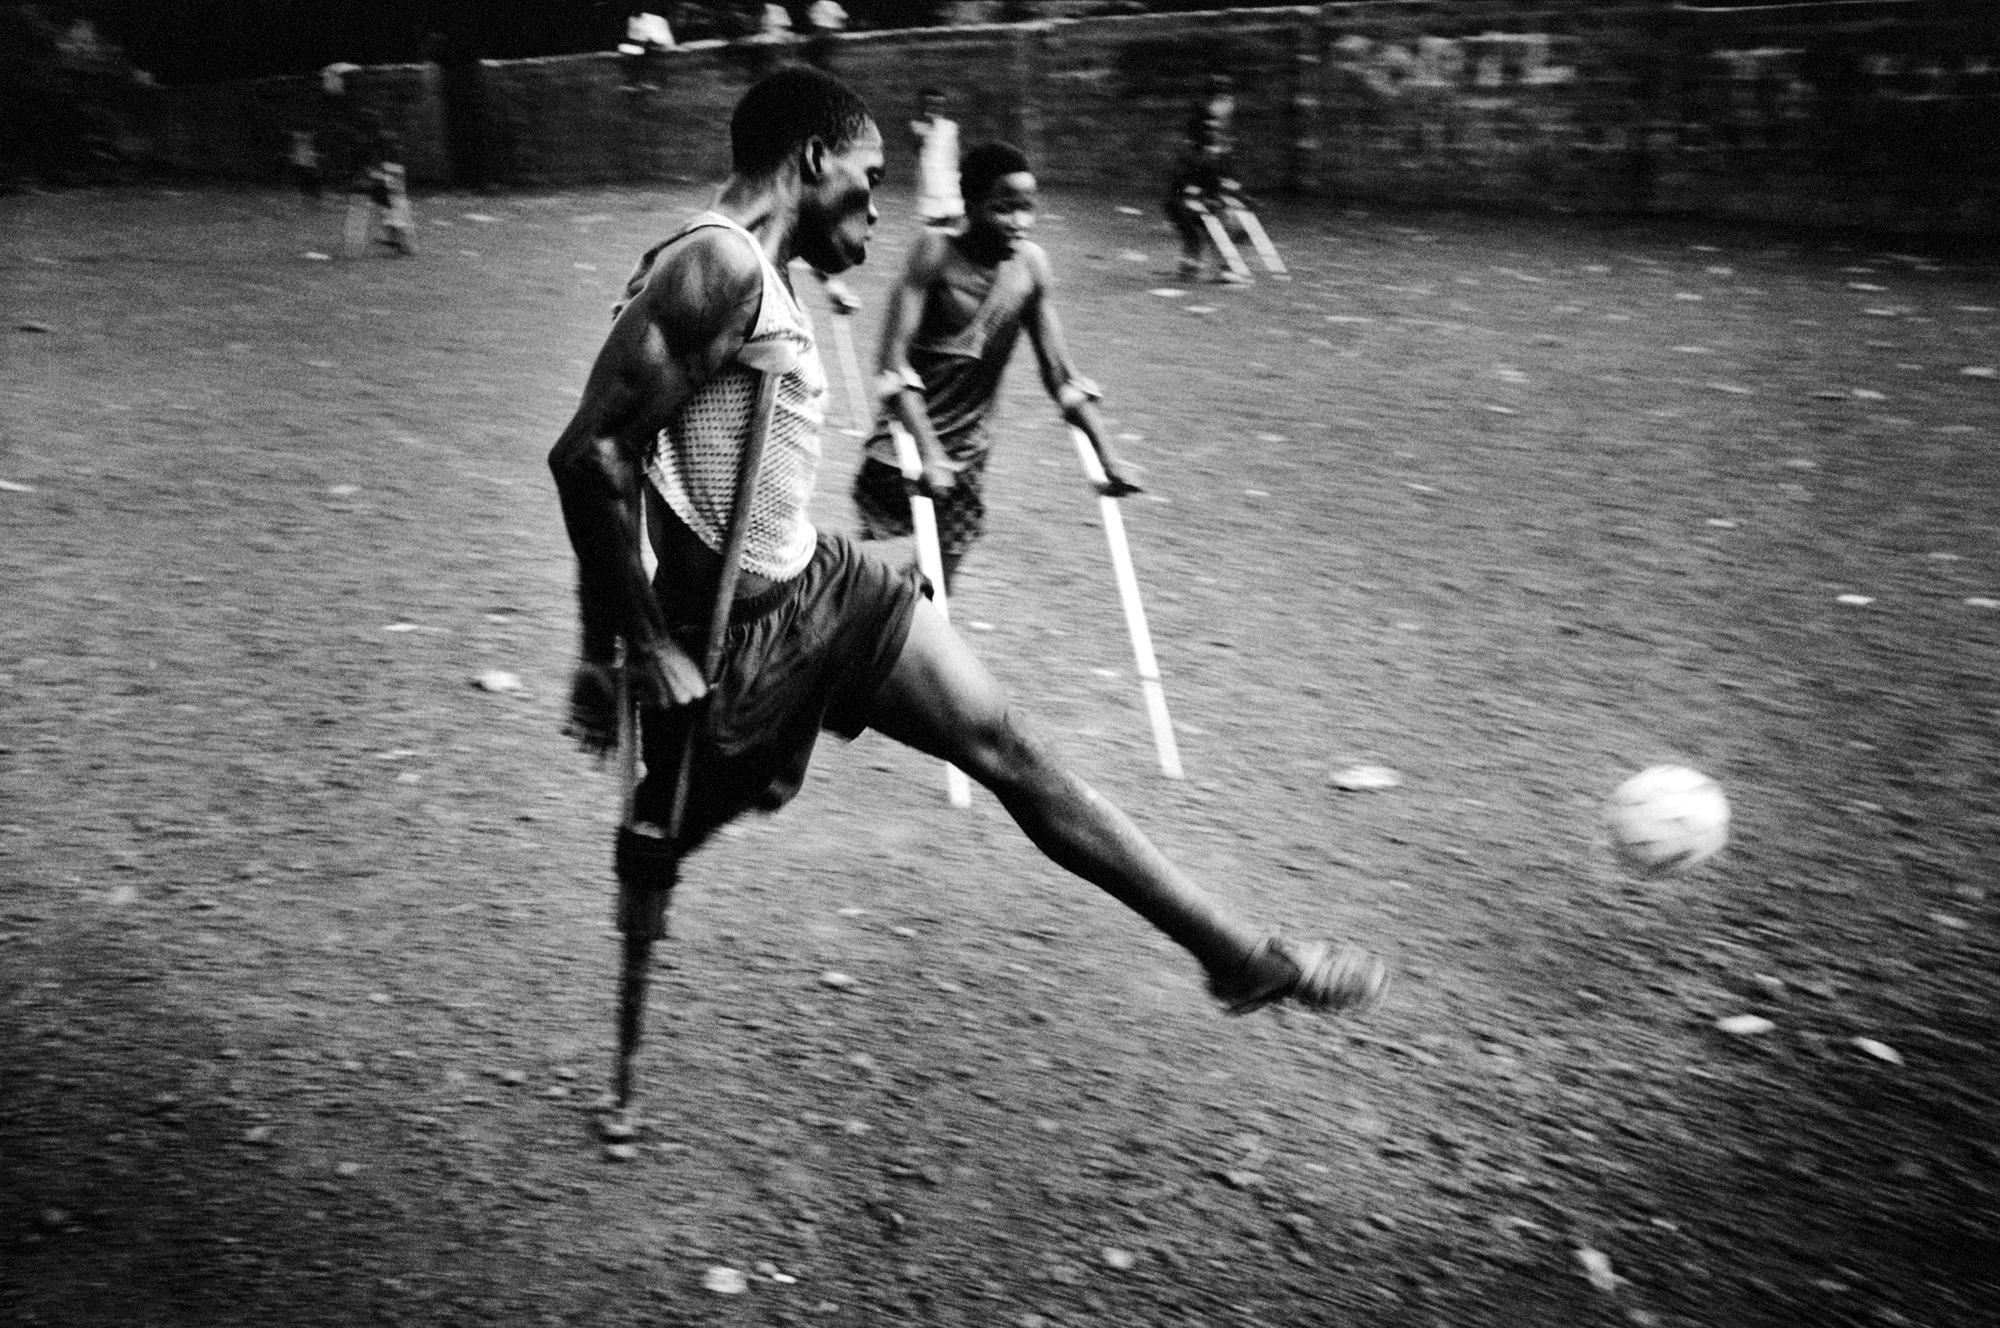 One Goal - Sierra Leone, Freetown, June 2002.
War amputees soccer...